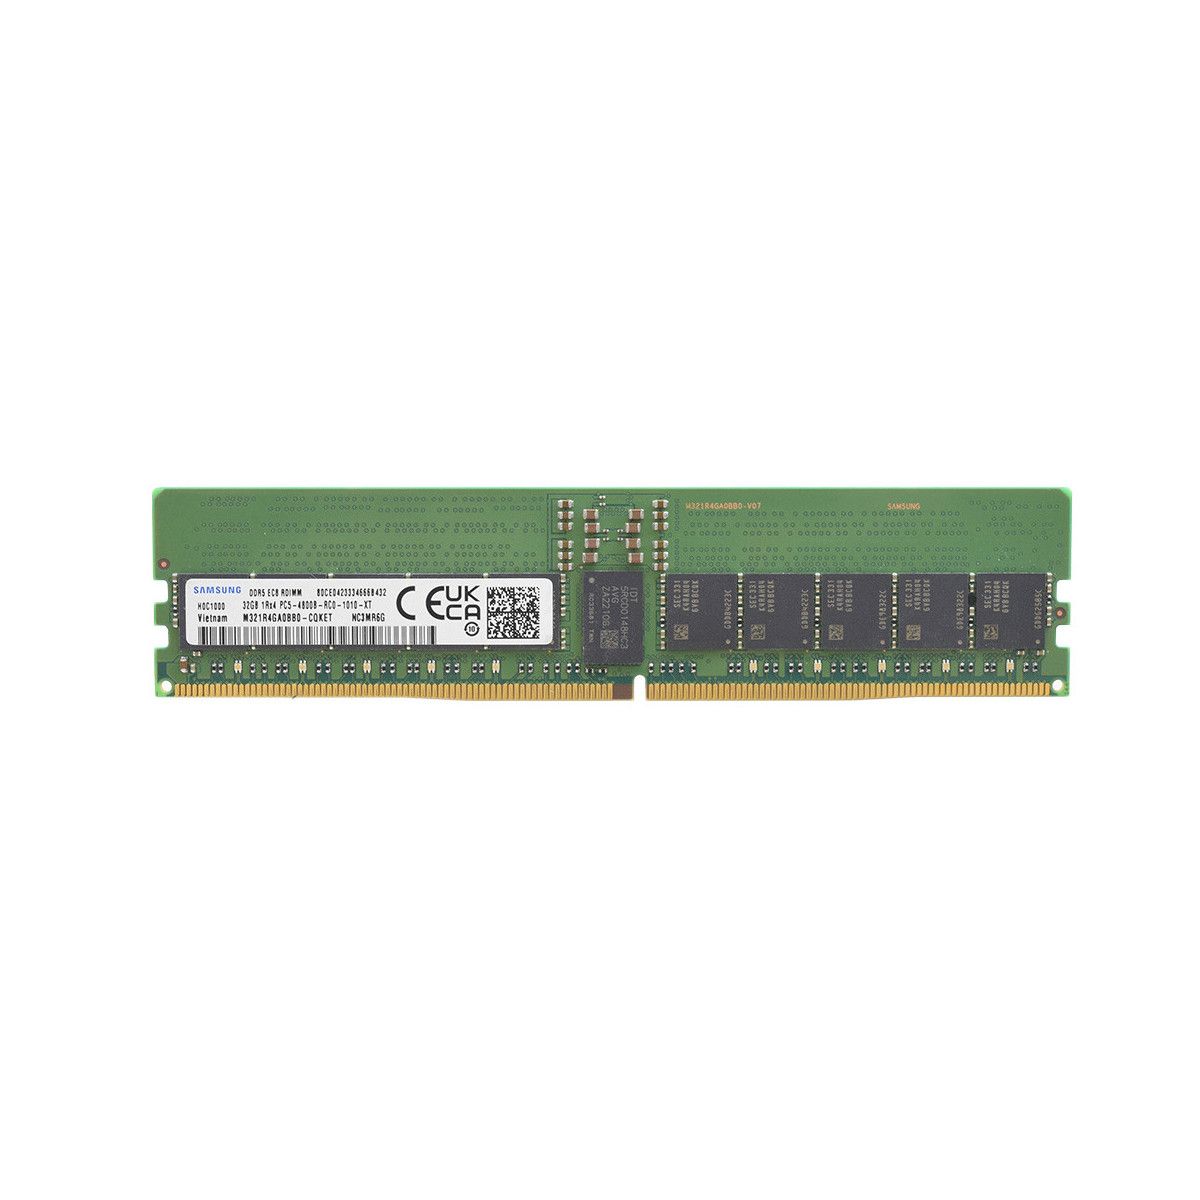 P50310-B21-MS - Memstar 1x 32GB DDR5-4800 RDIMM PC5-38400R - Mem-Star Compatible OEM Memory 1 - Memstar 